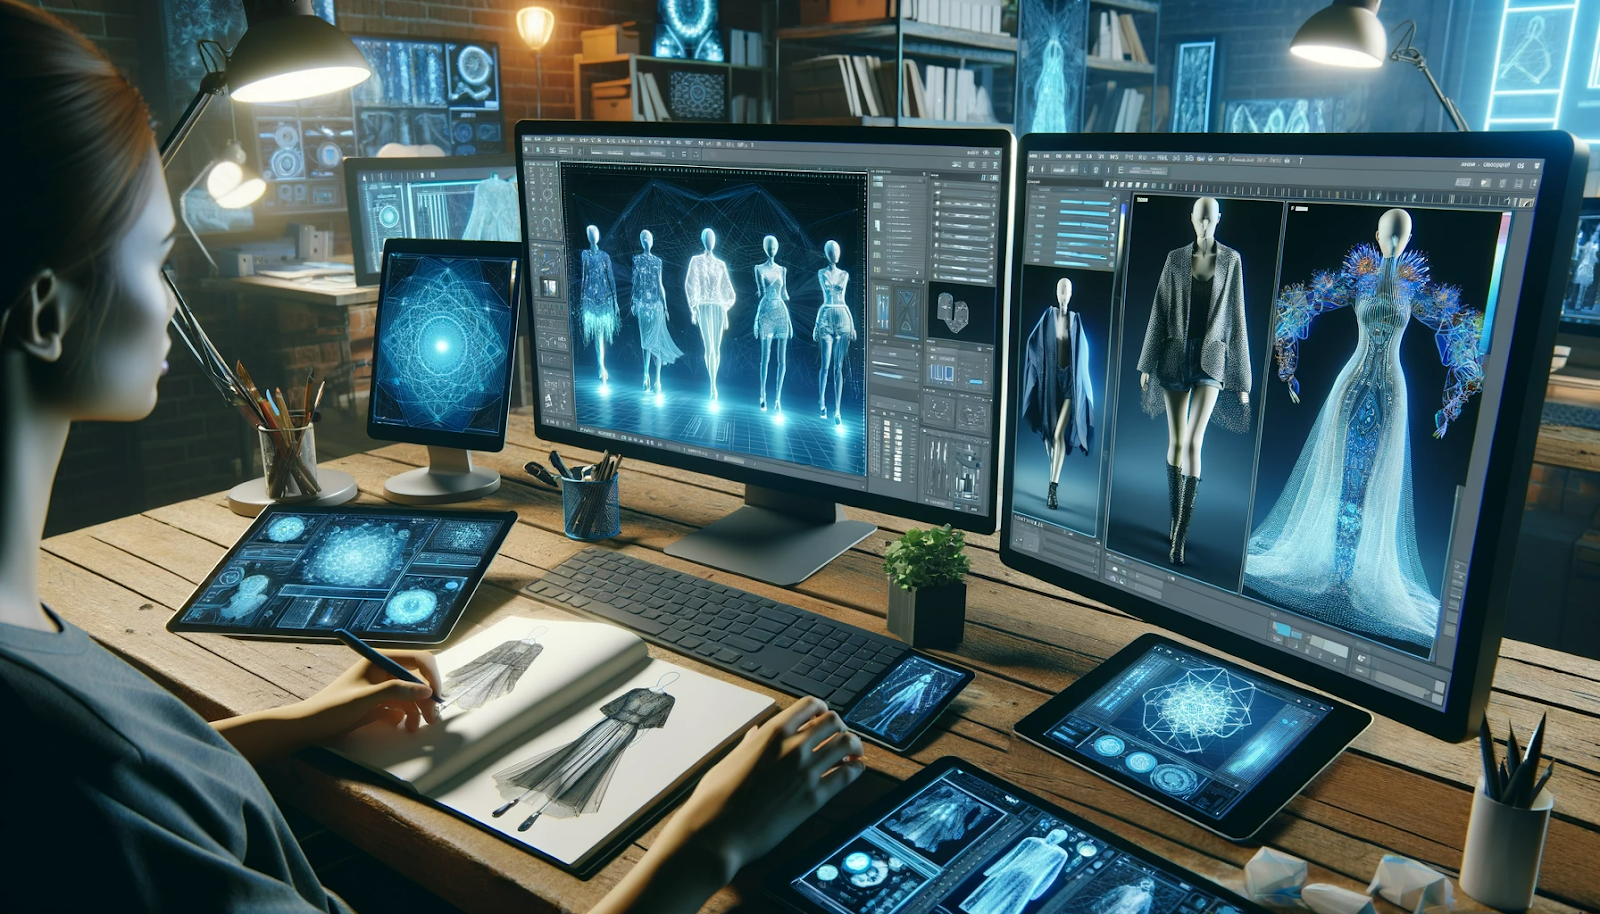 Digital Designer workspace with multiple screens